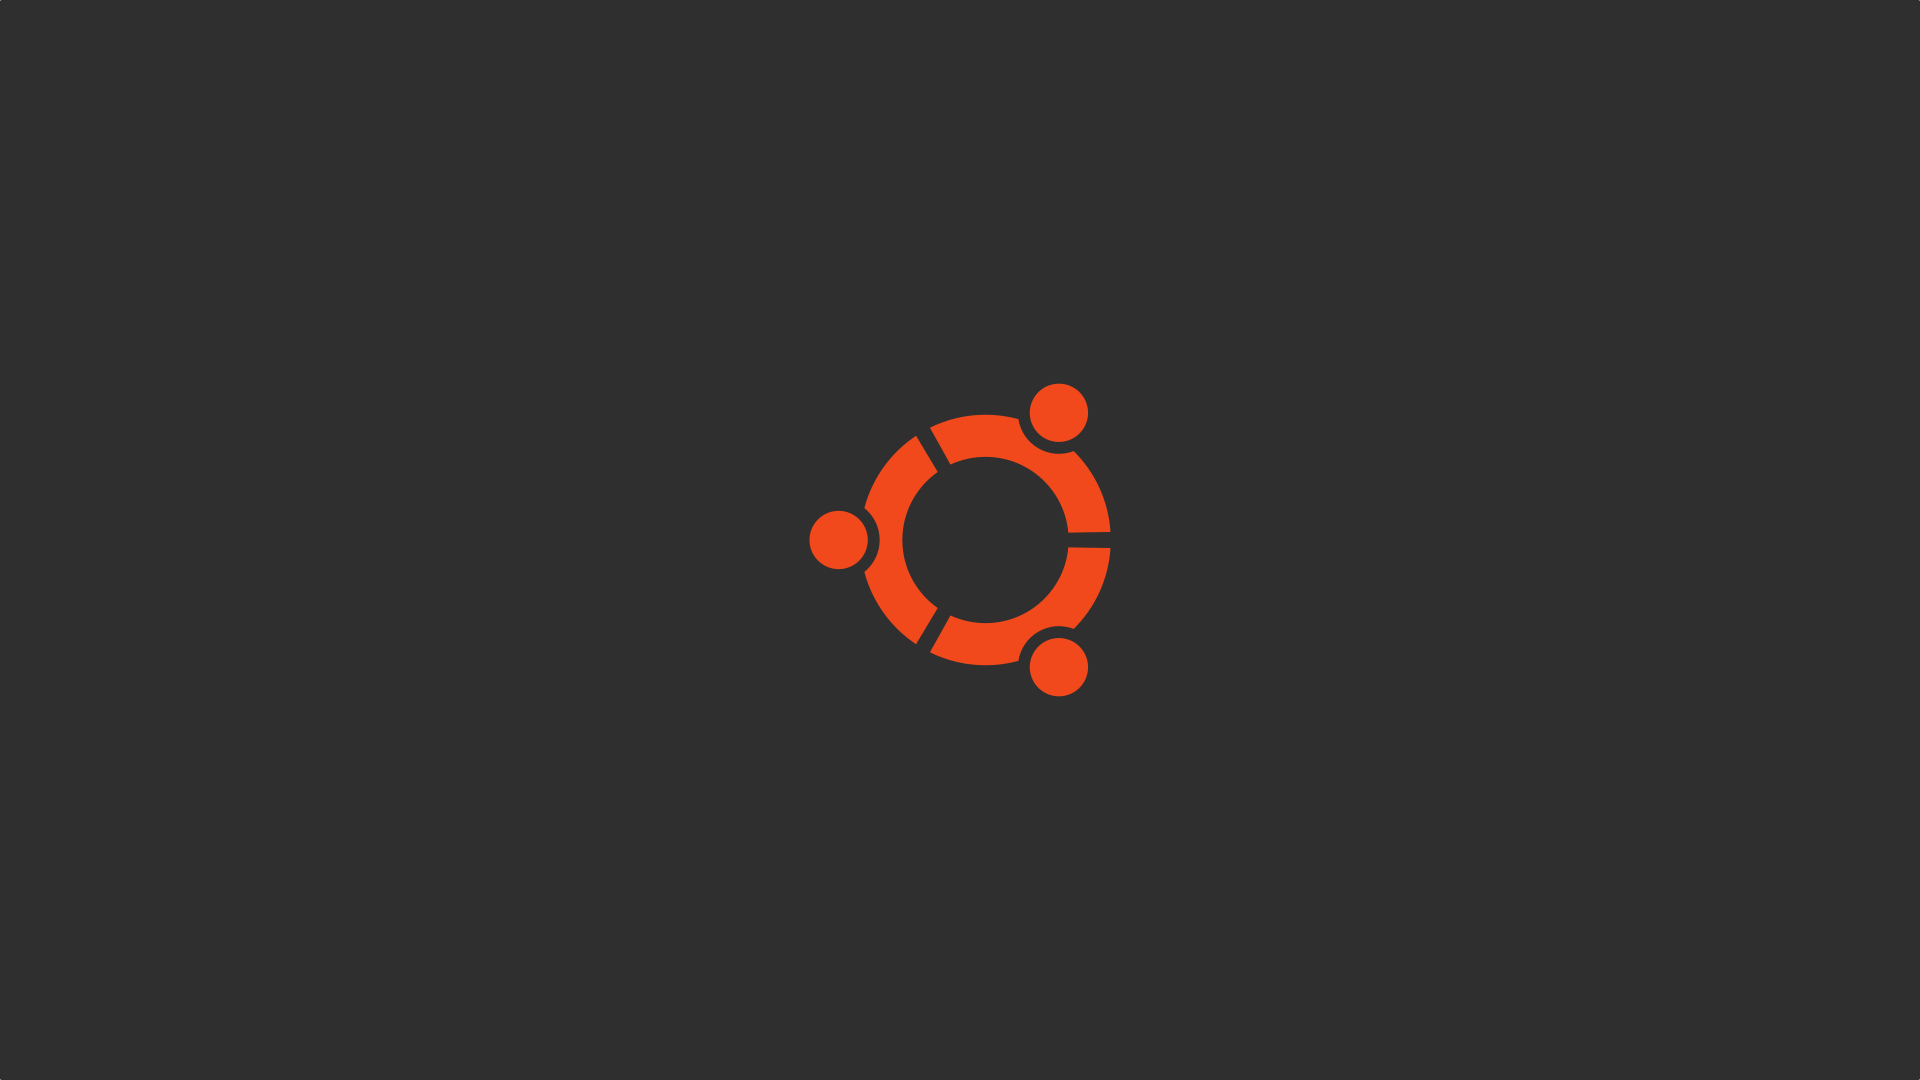 1920x1080 Ubuntu Wallpaper Orange and dark KDE Store